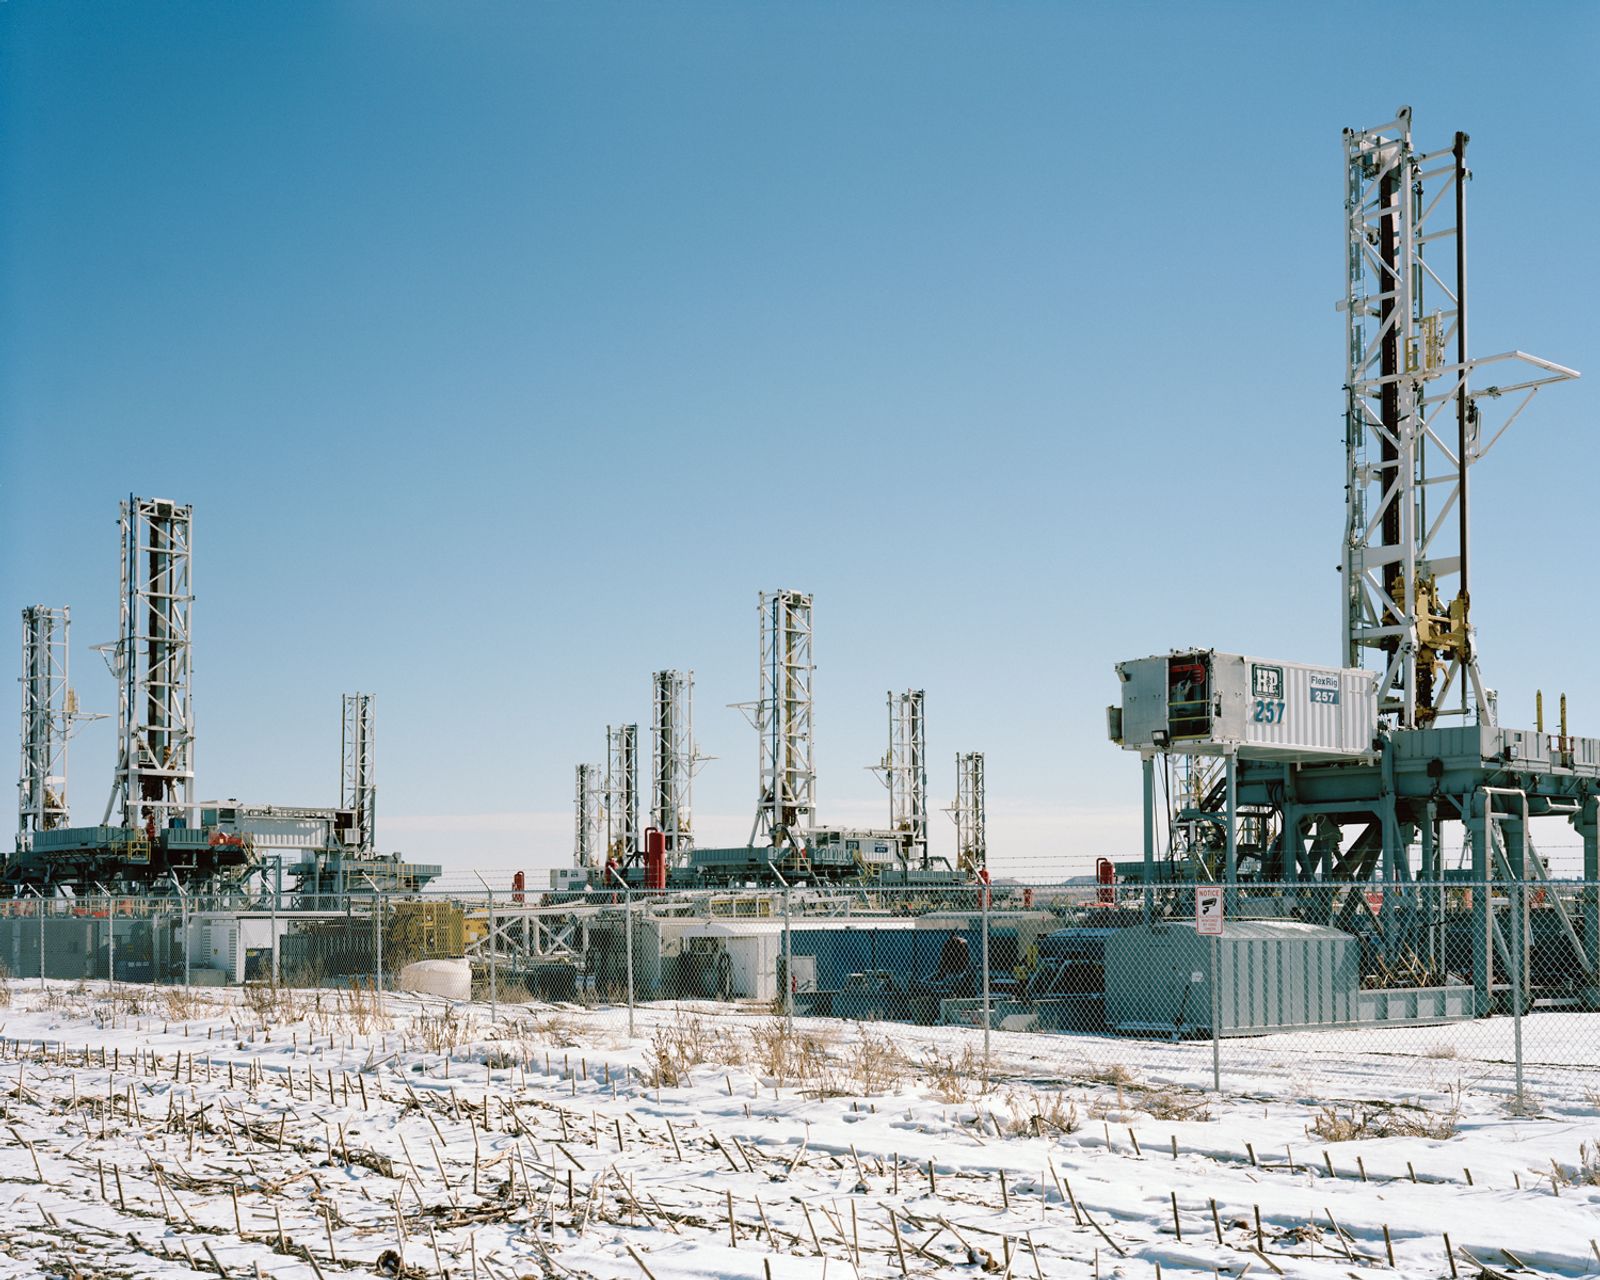 © Sarah Christianson - Drilling rigs at Five Diamond Industrial Park, Dickinson, February 2016.